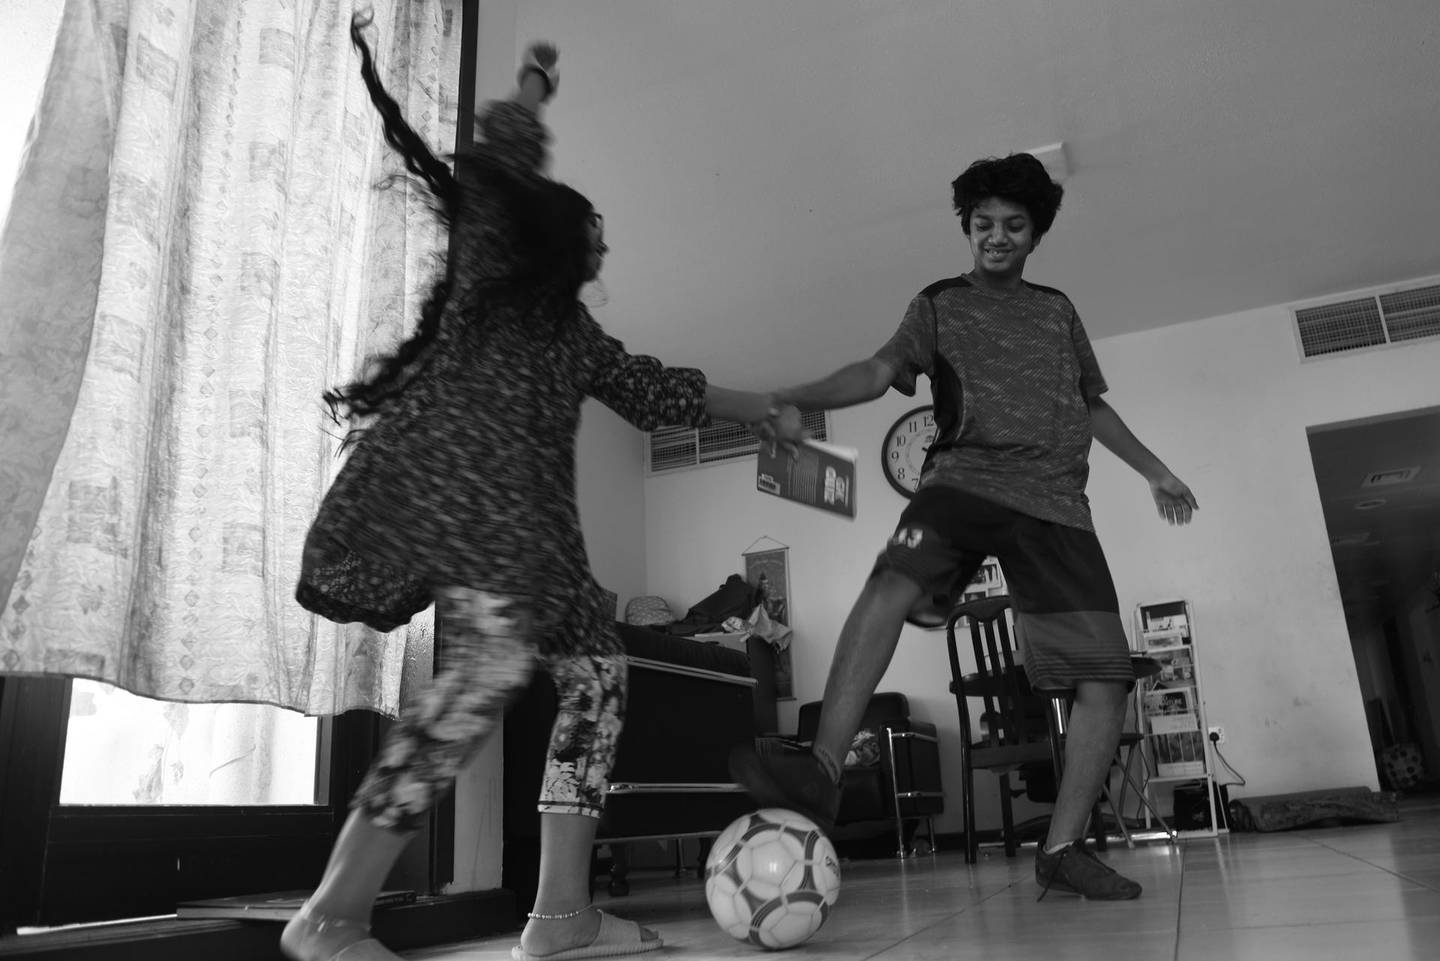 Vidhyaa Chandramohan's children playing football in the living room of their Abu Dhabi flat. Vidhyaa Chandramohan